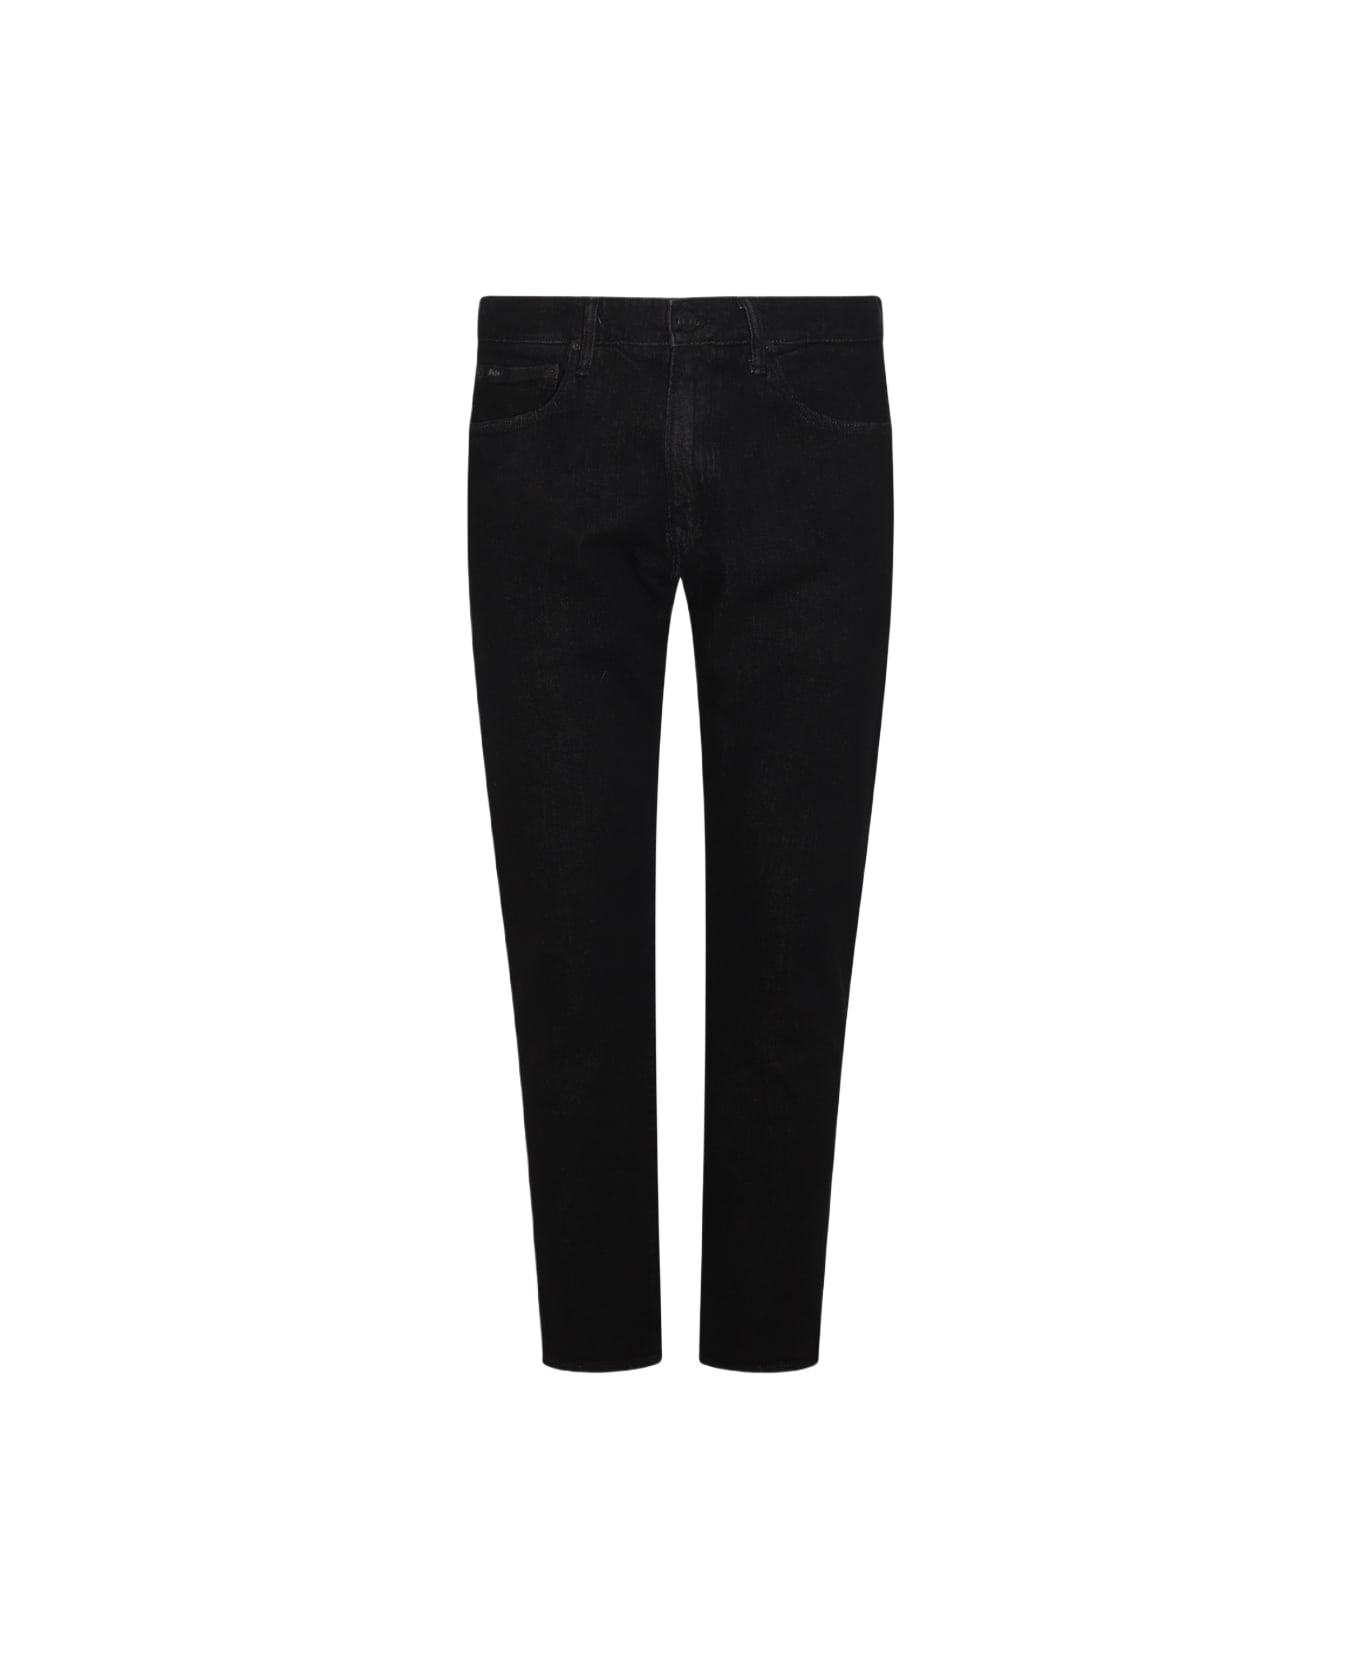 Polo Ralph Lauren Black Cotton Denim Jeans - HARRIS V2 デニム